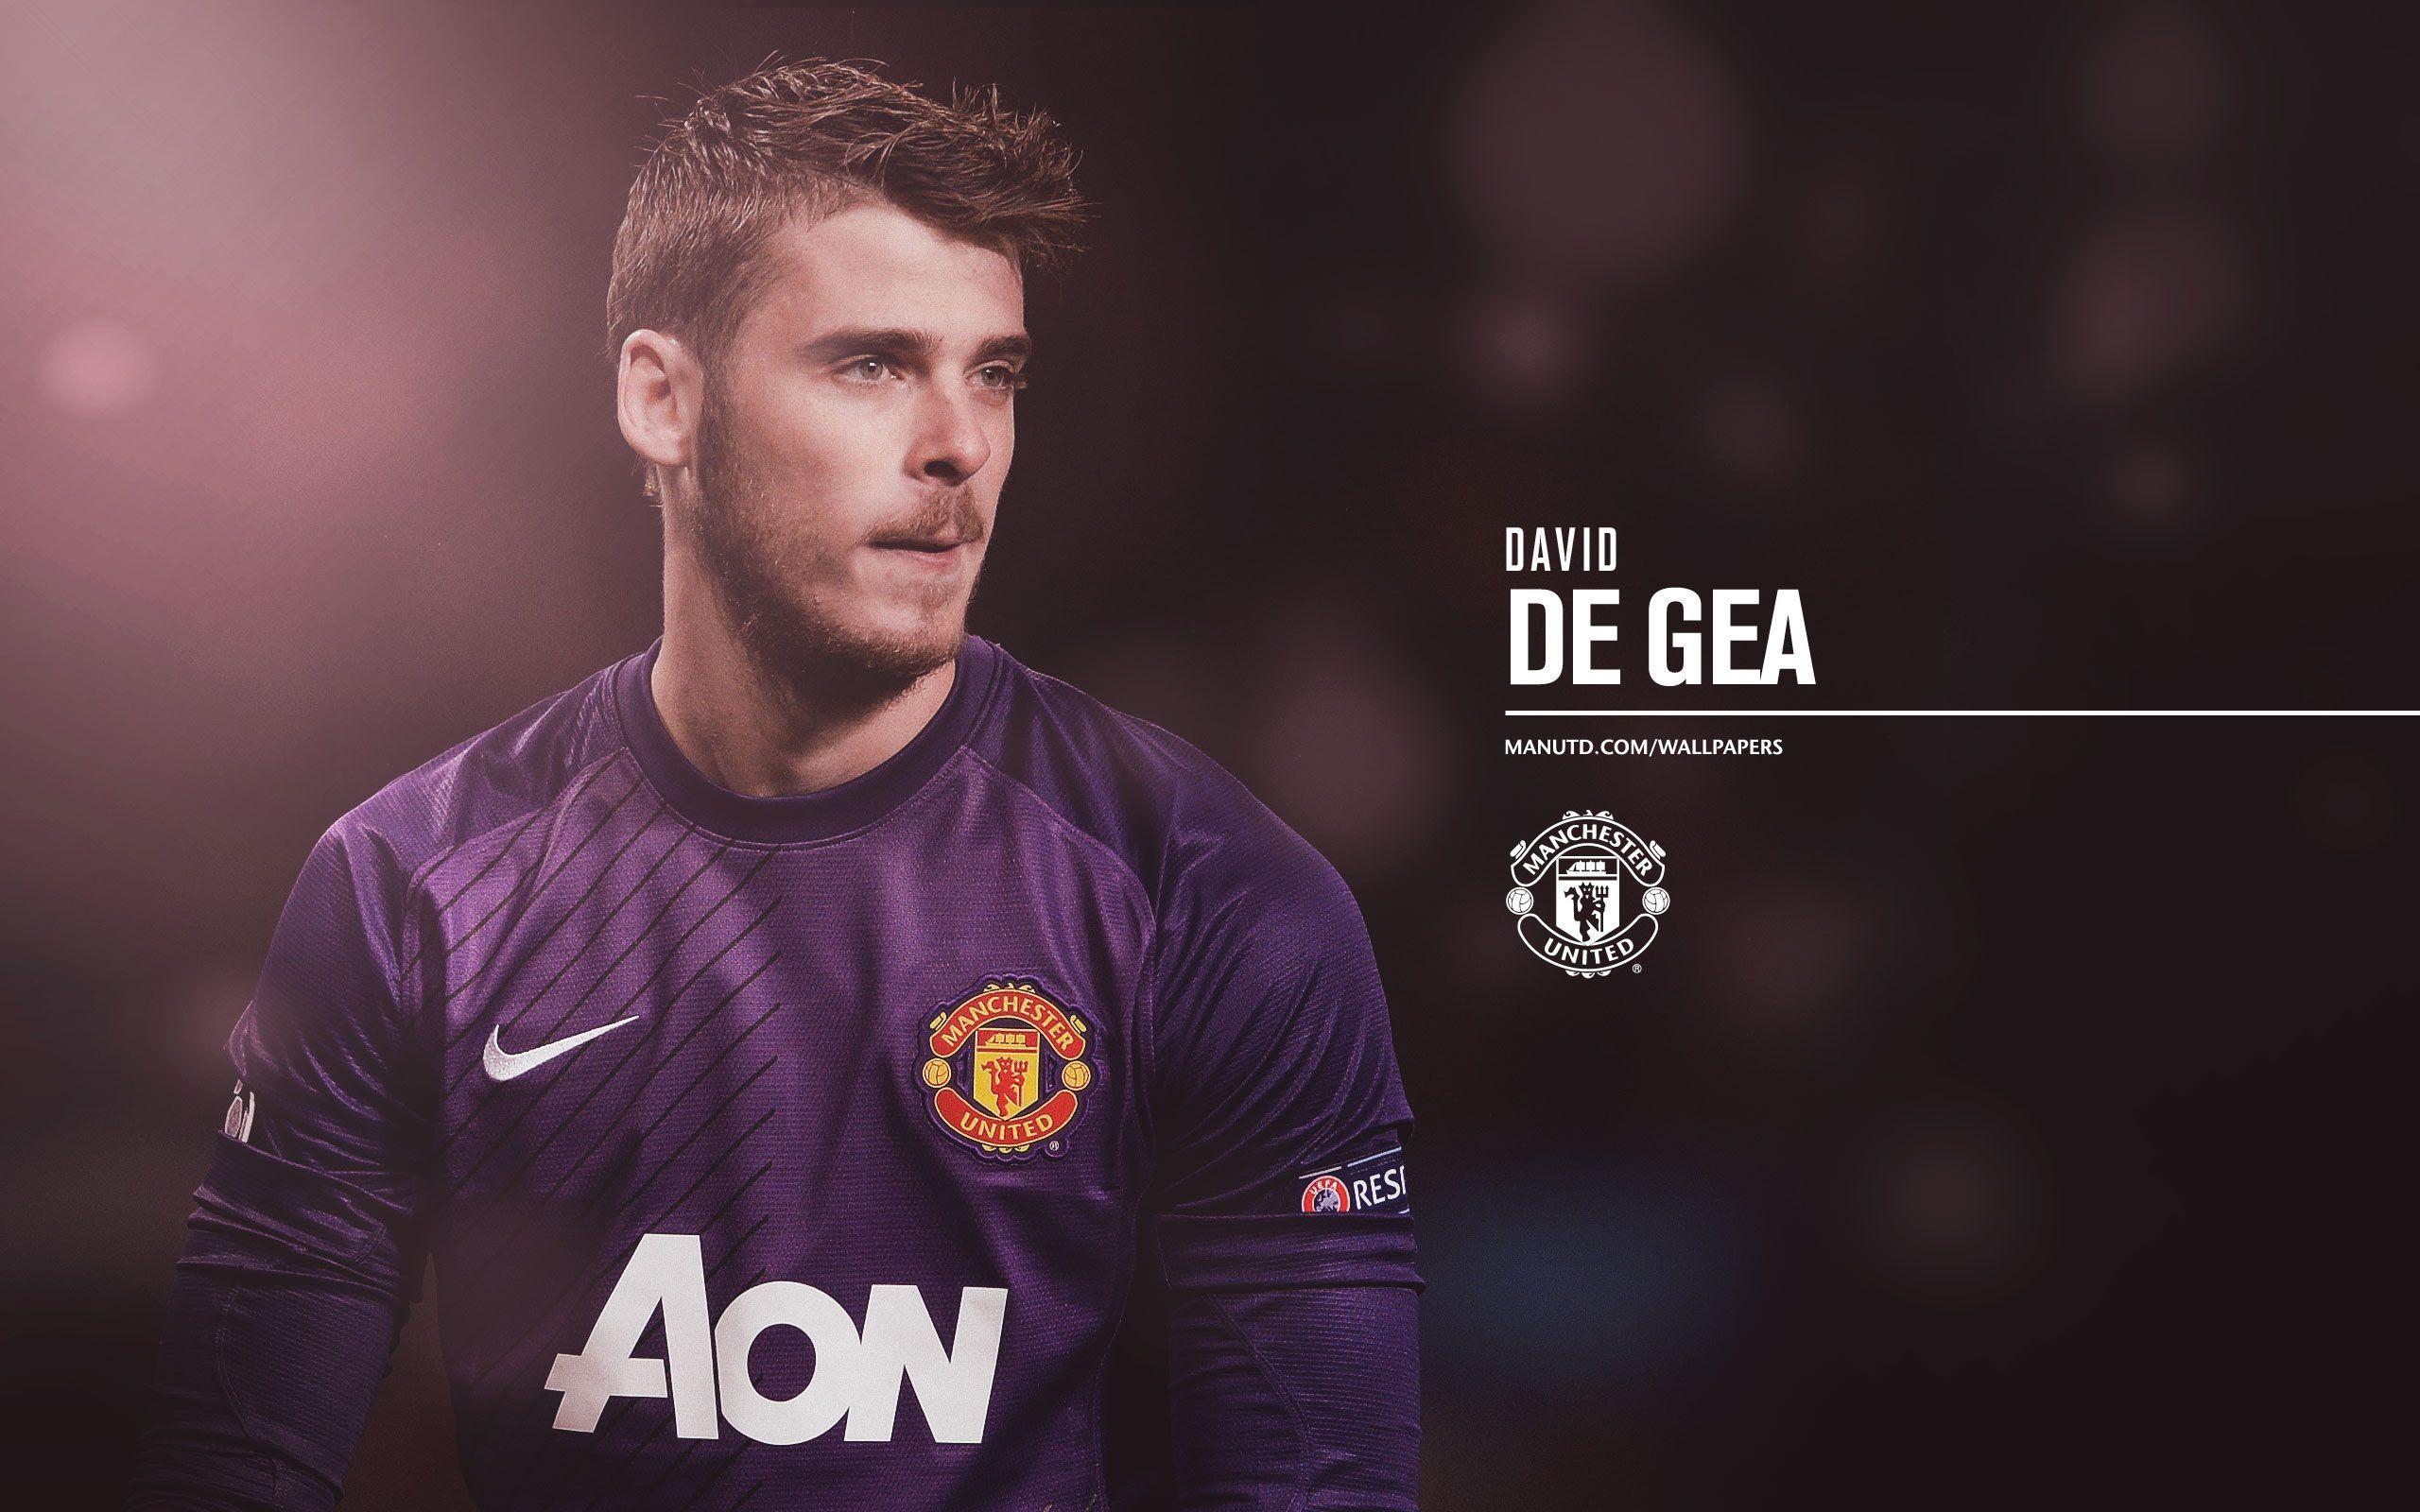 David De Gea HD Desktop Wallpapers at Manchester United | Man Utd Core